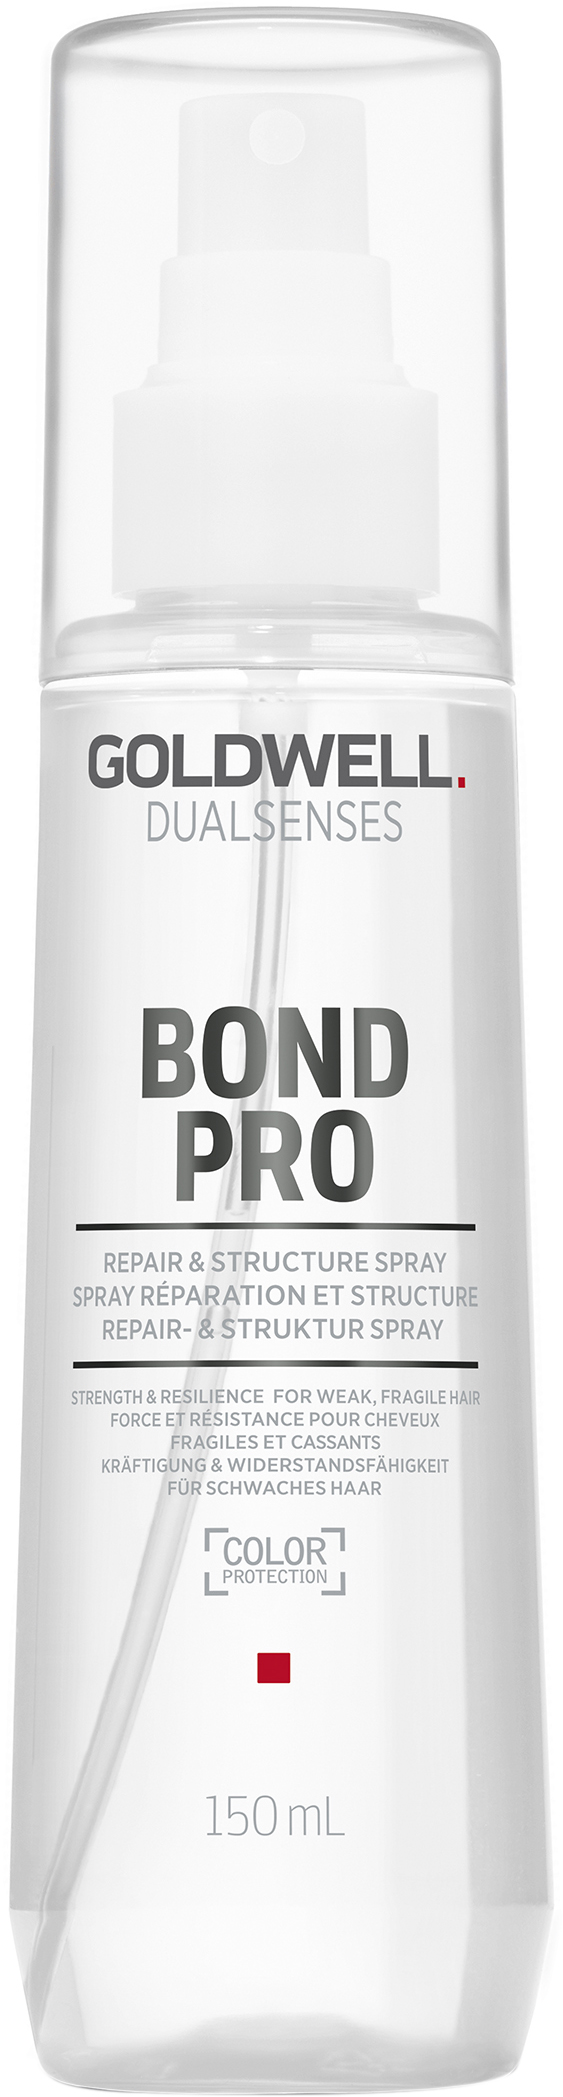 Gоldwell dualsenses bond pro structure spray спрей сыворотка укрепляющая для тонких и ломких волос 150 мл